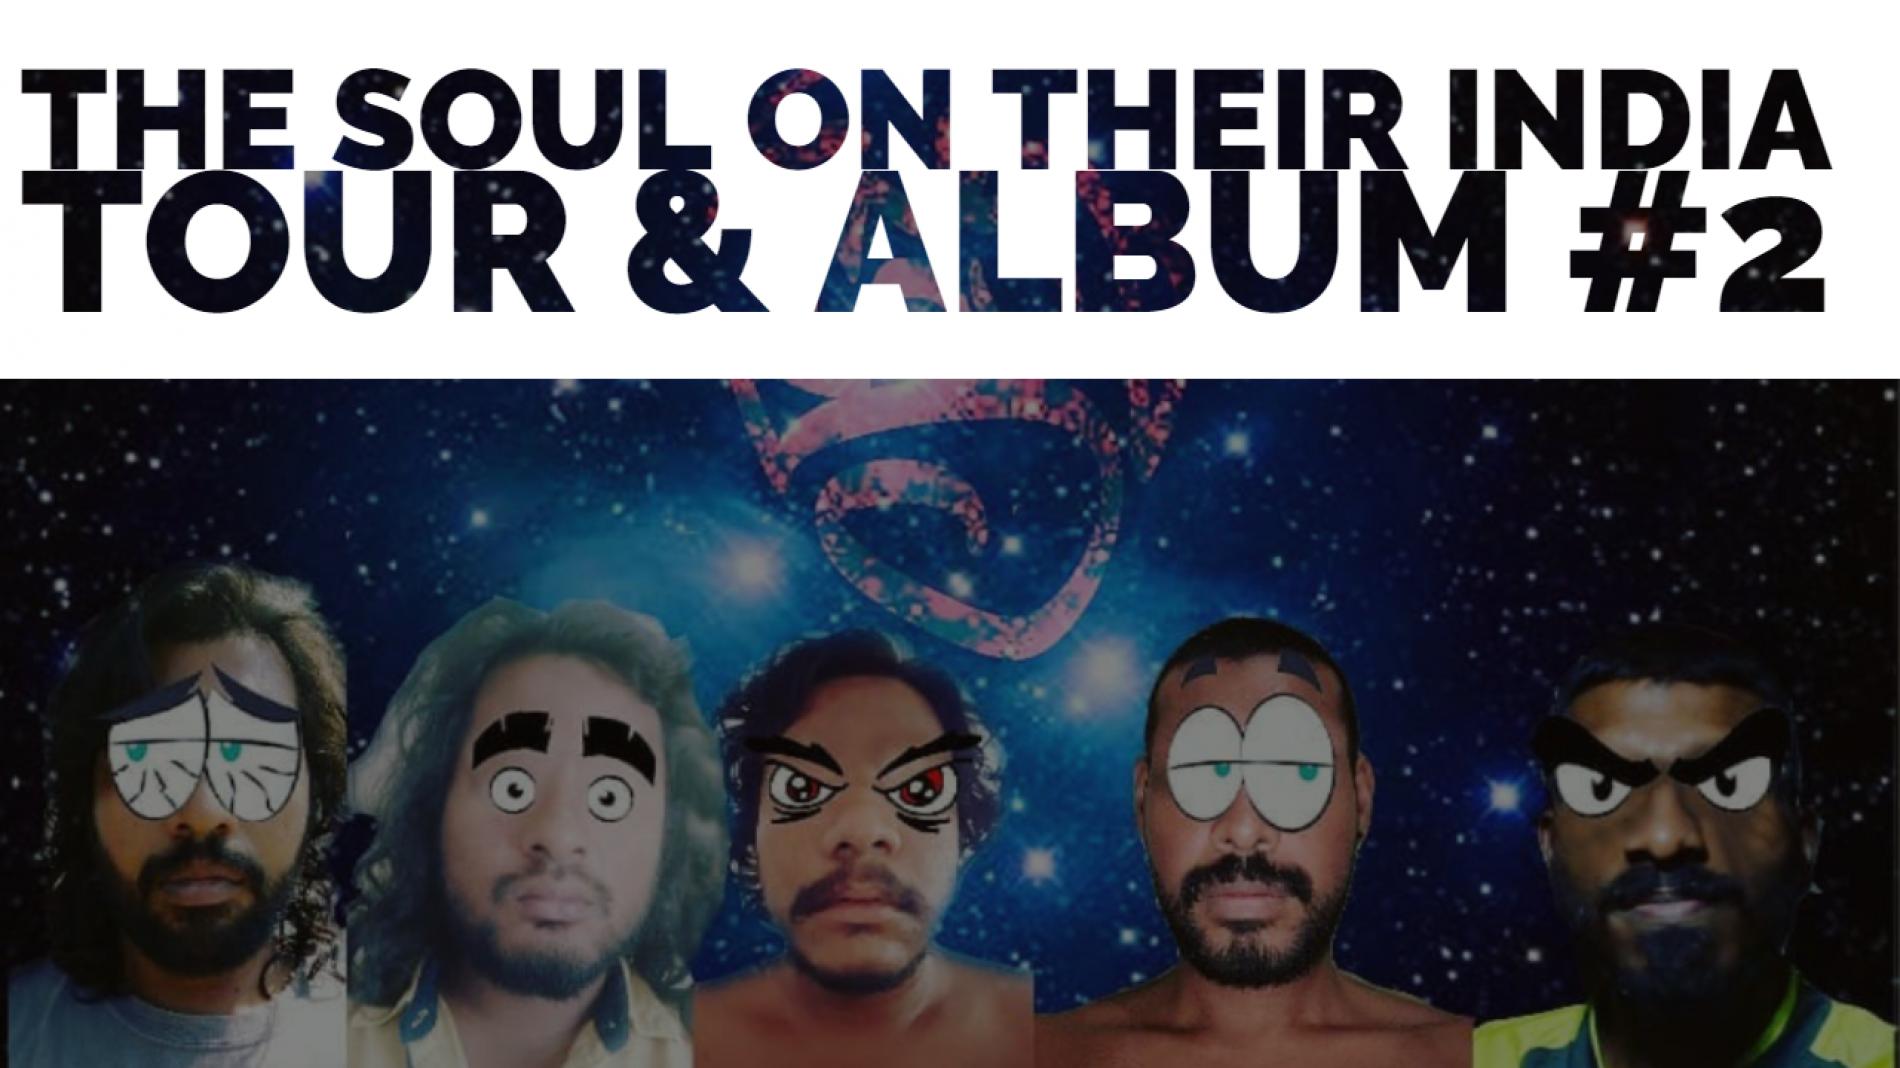 The Soul Announces India Tour & Album #2